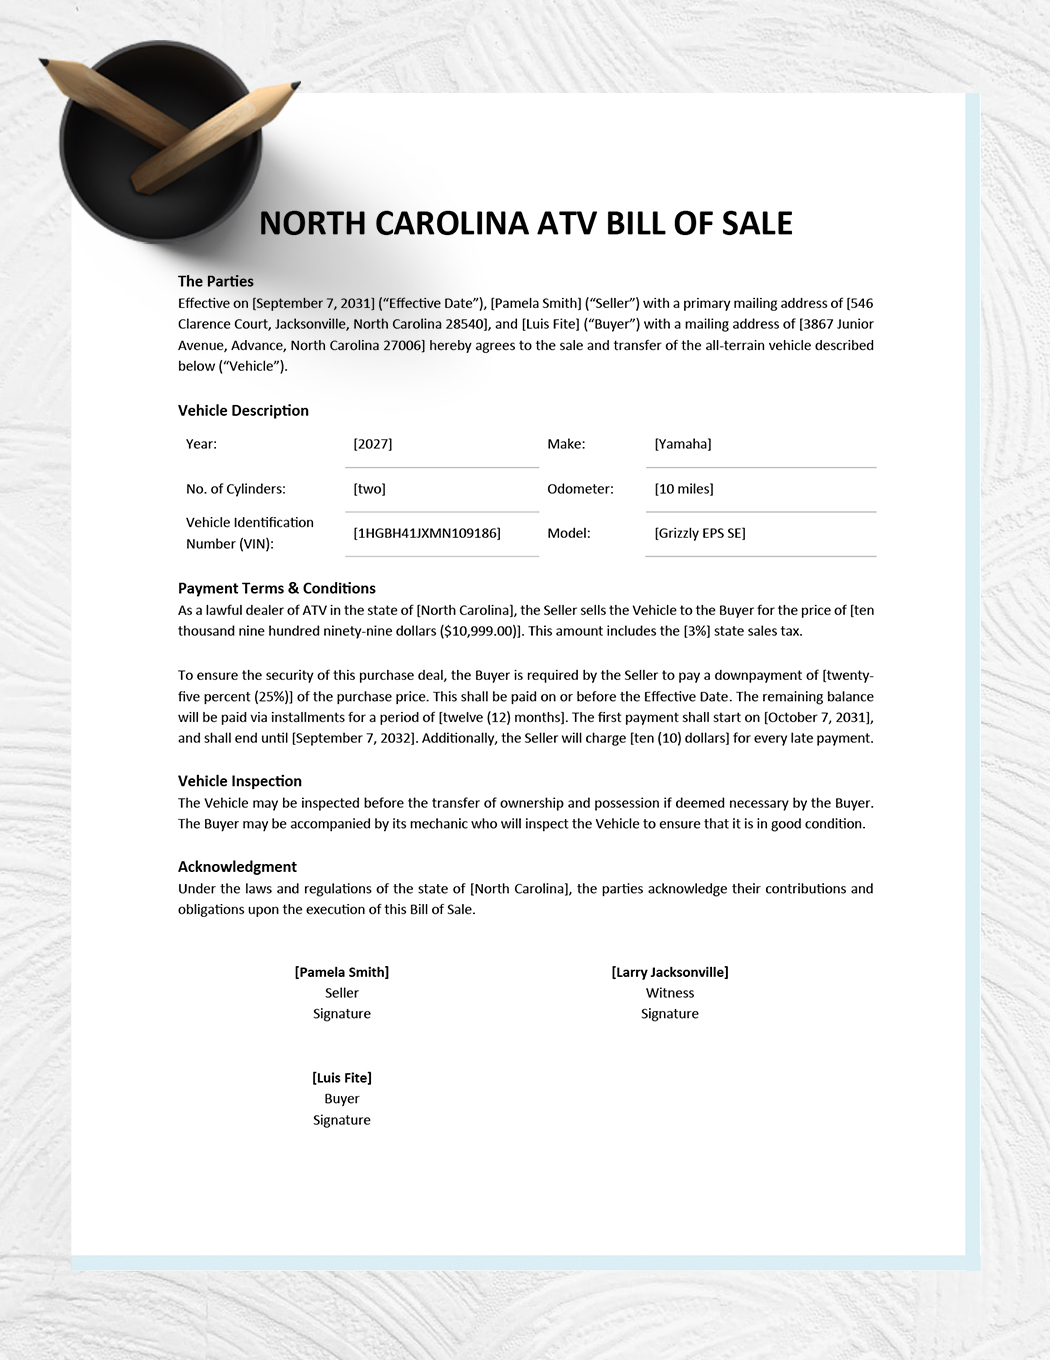 North Carolina ATV Bill of Sale Template Download in Word, Google